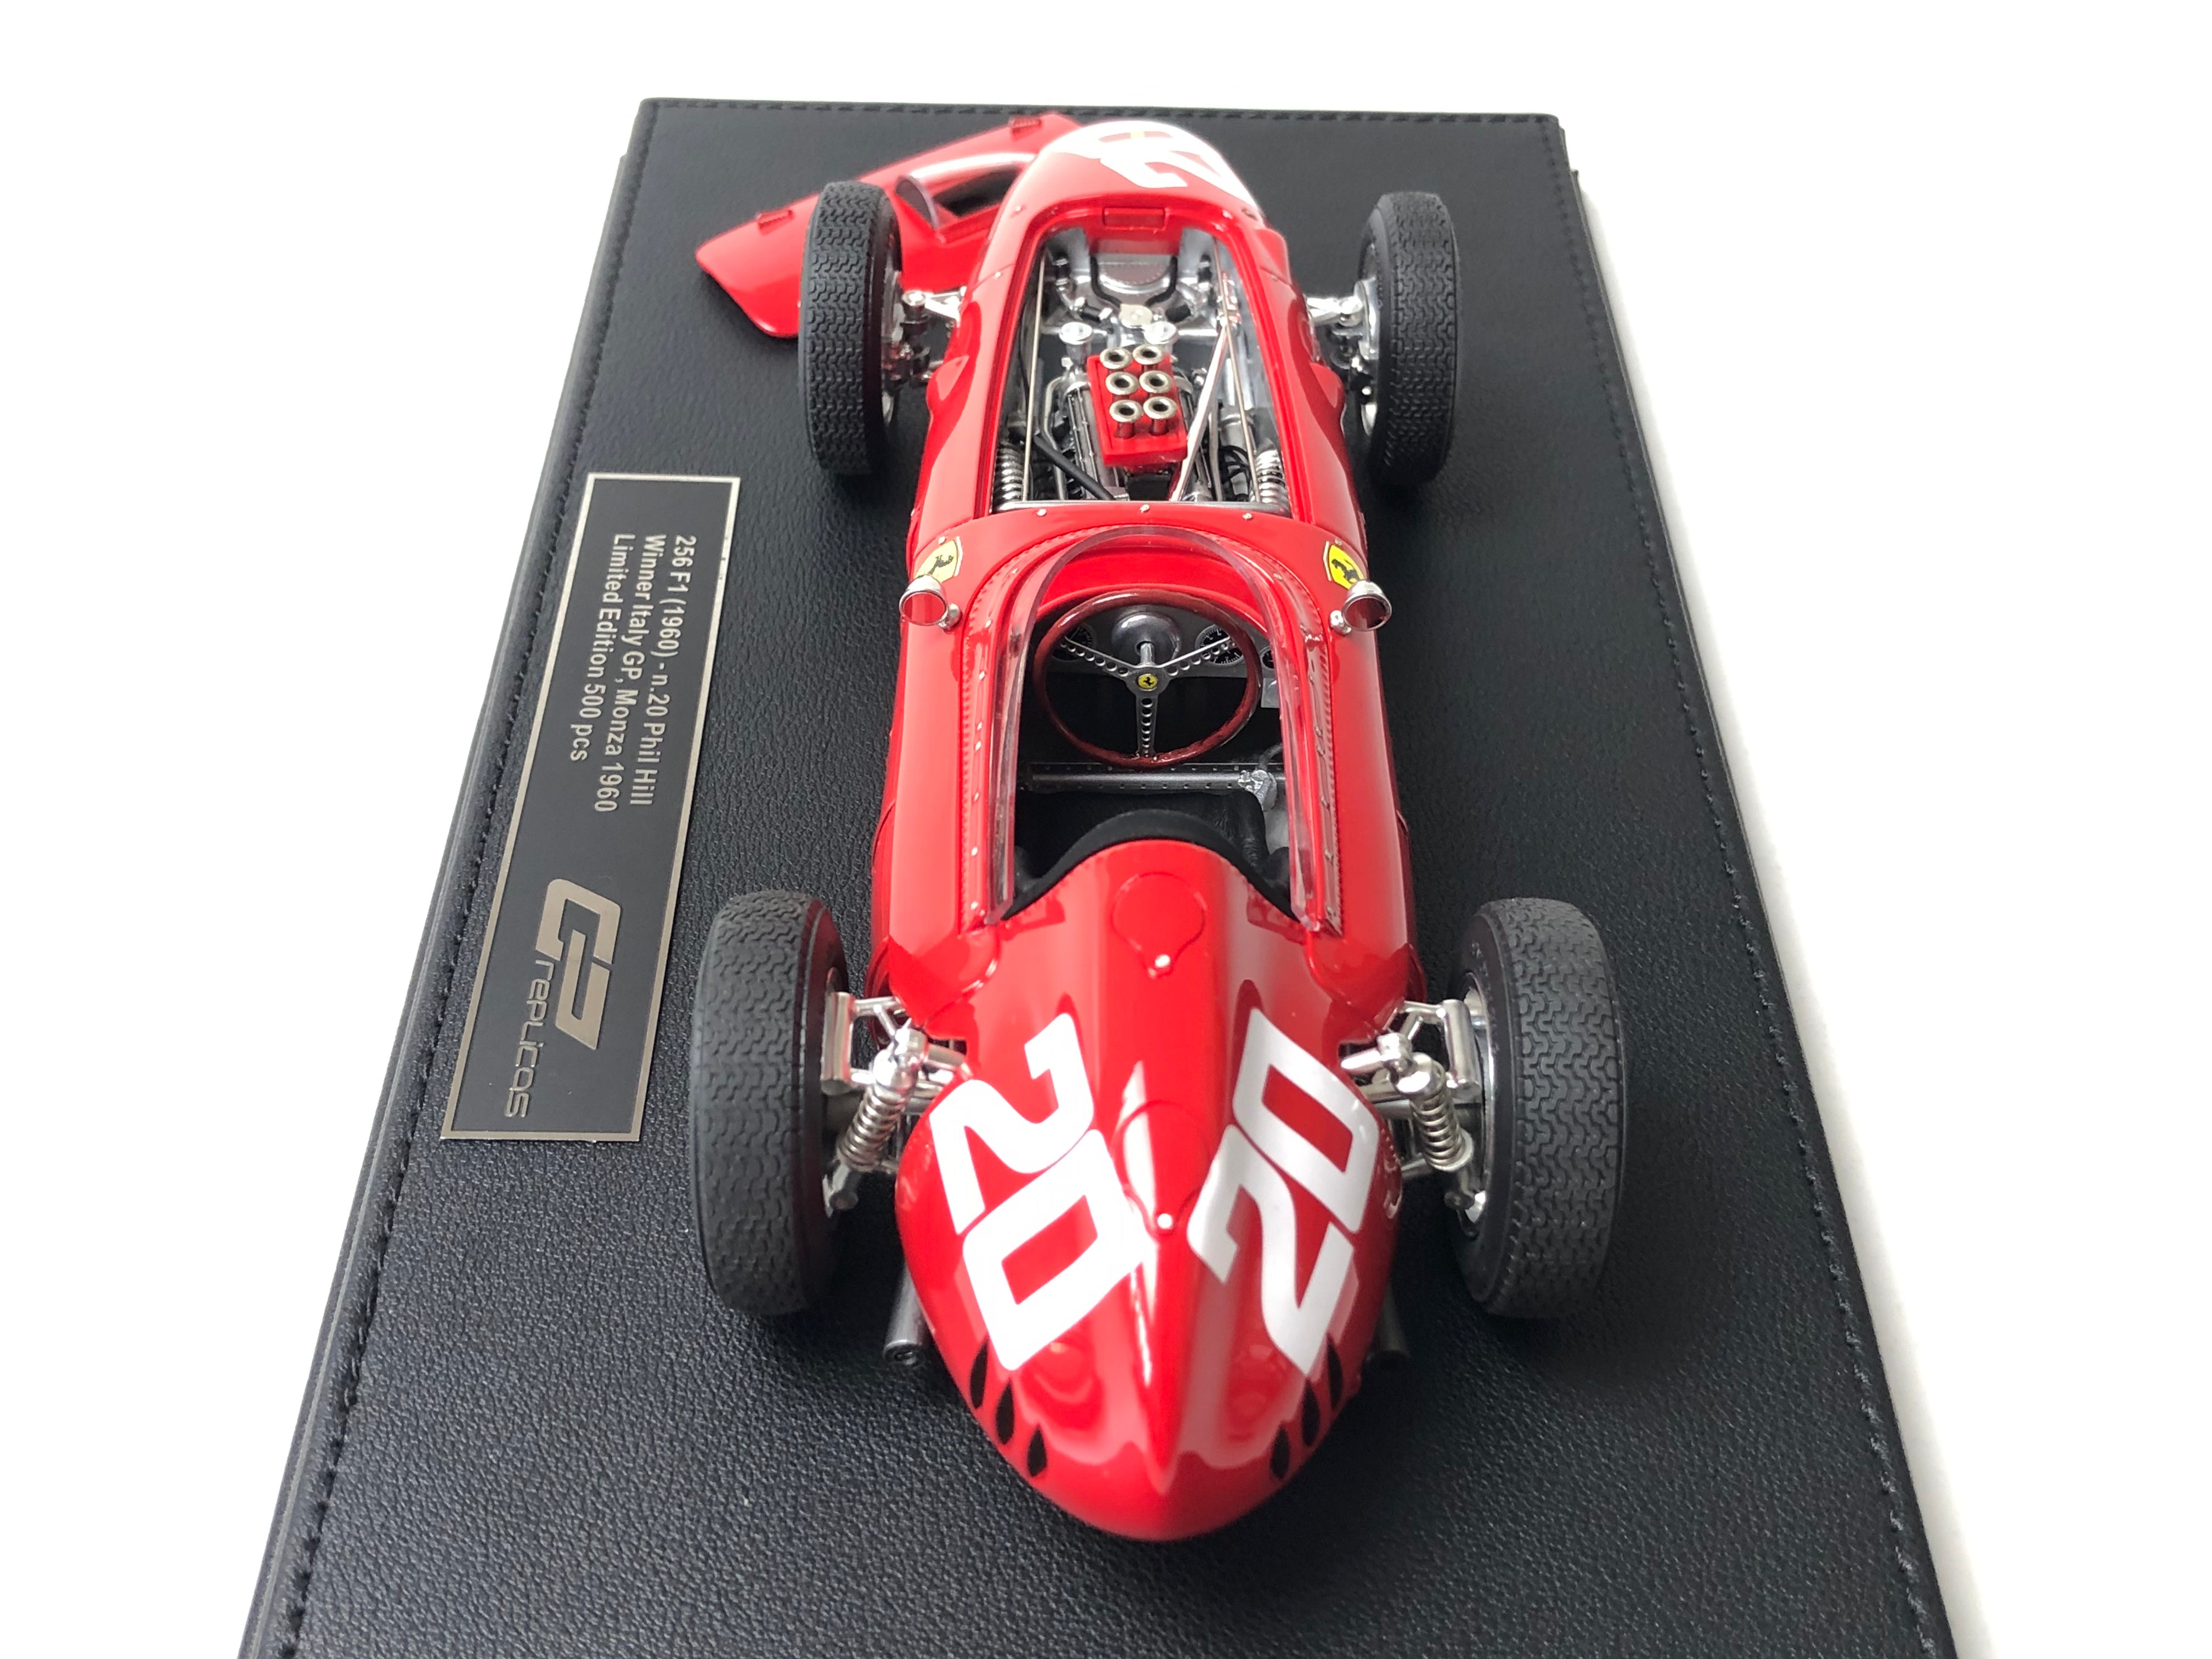 1958 Ferrari 246 Dino F1 Mike Hawthorn #4 escala 1:18